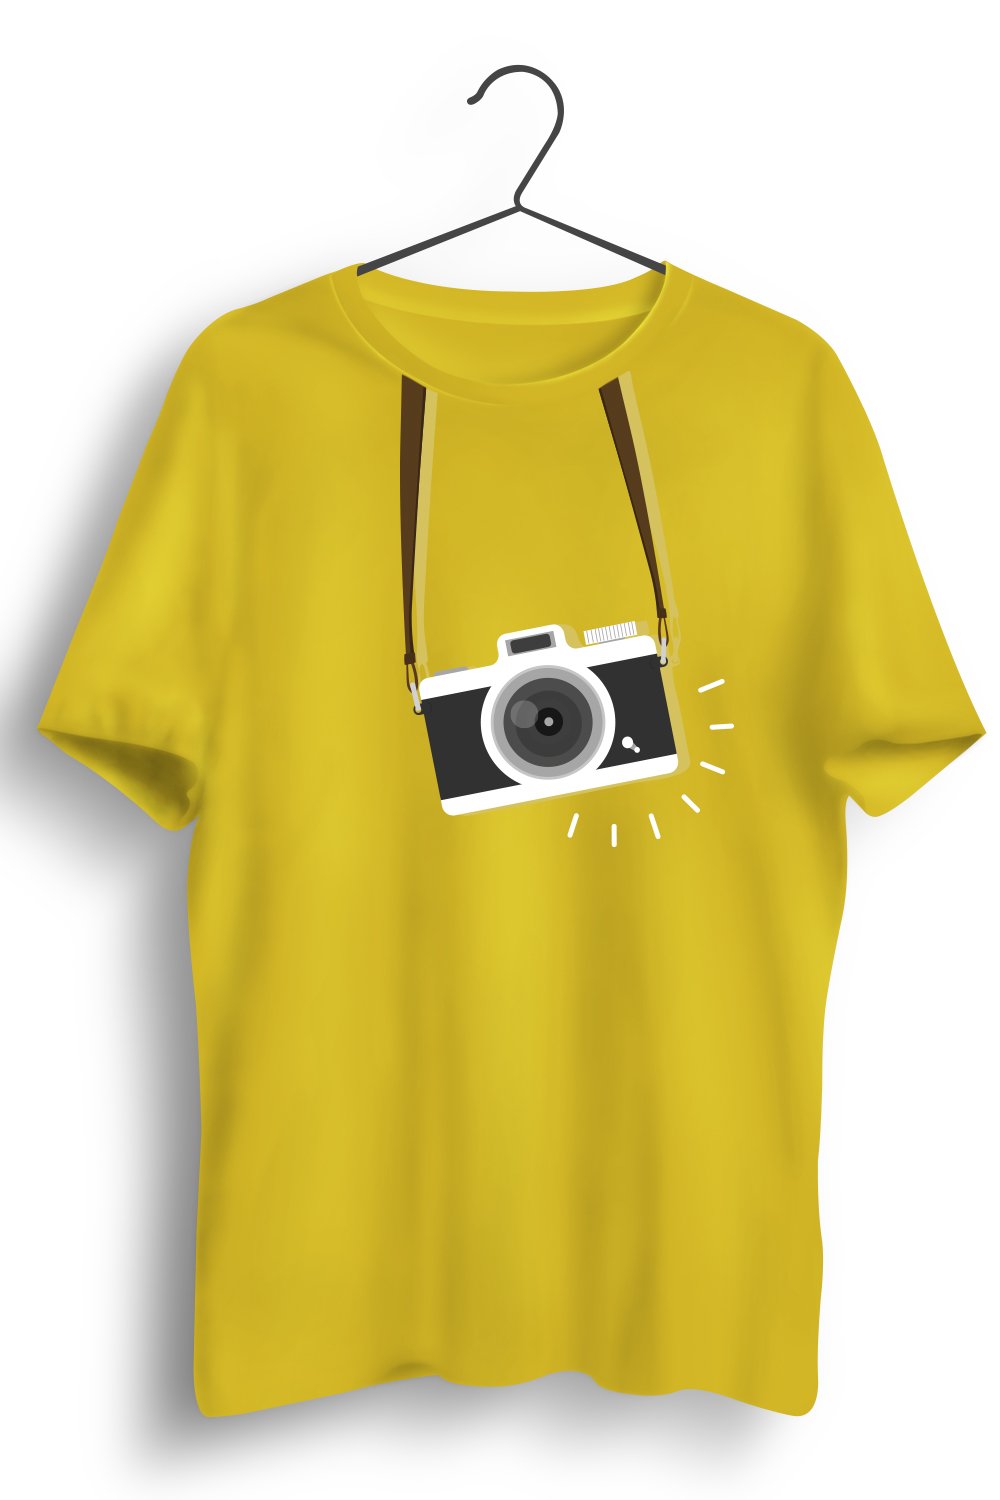 Camera Strap Graphic Printed Yellow Tshirt